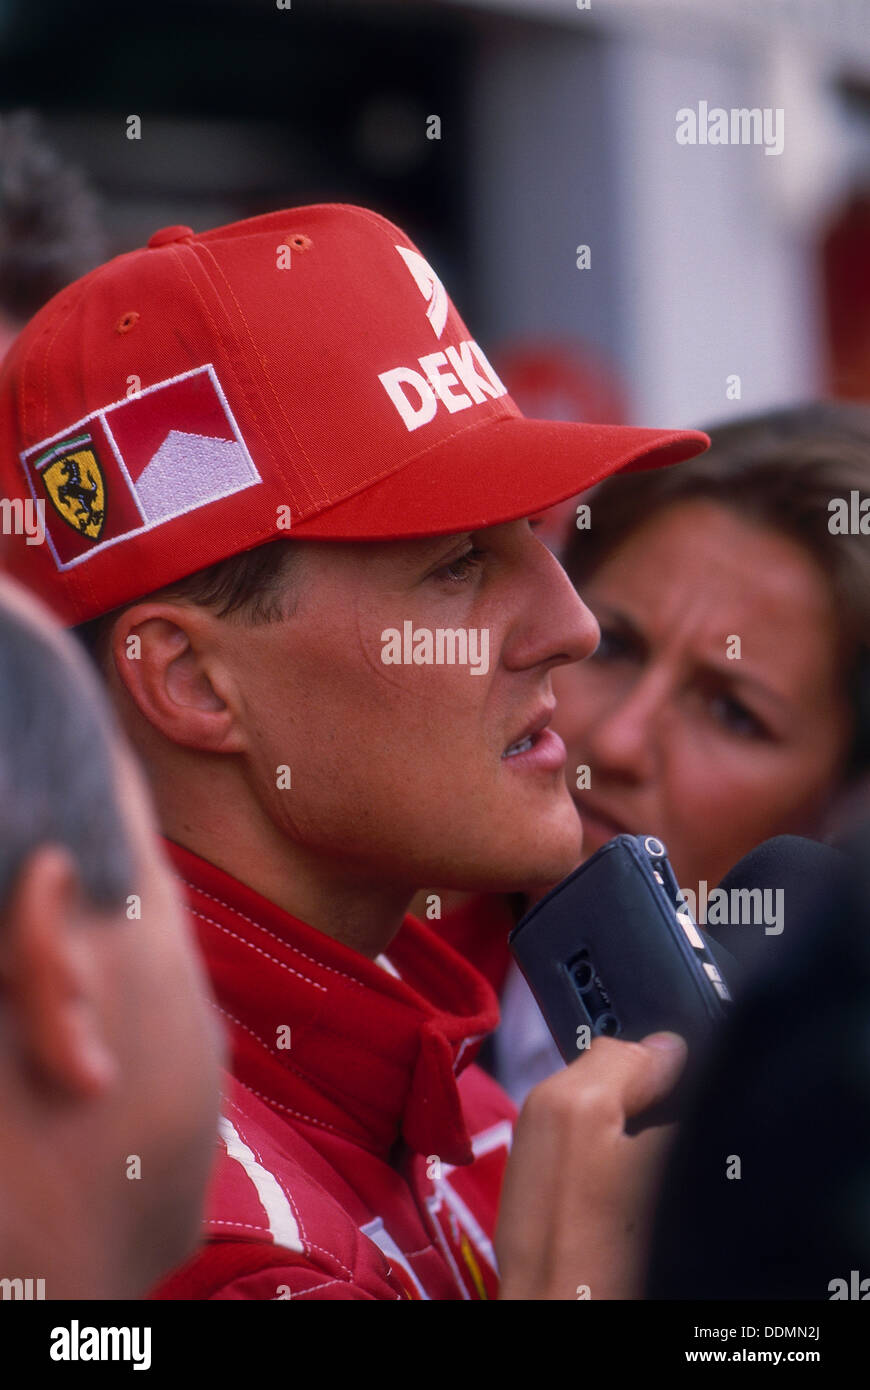 Michael Schumacher siendo entrevistado, British Grand Prix, Silverstone, Northamptonshire, 1997. Artista: Desconocido Foto de stock